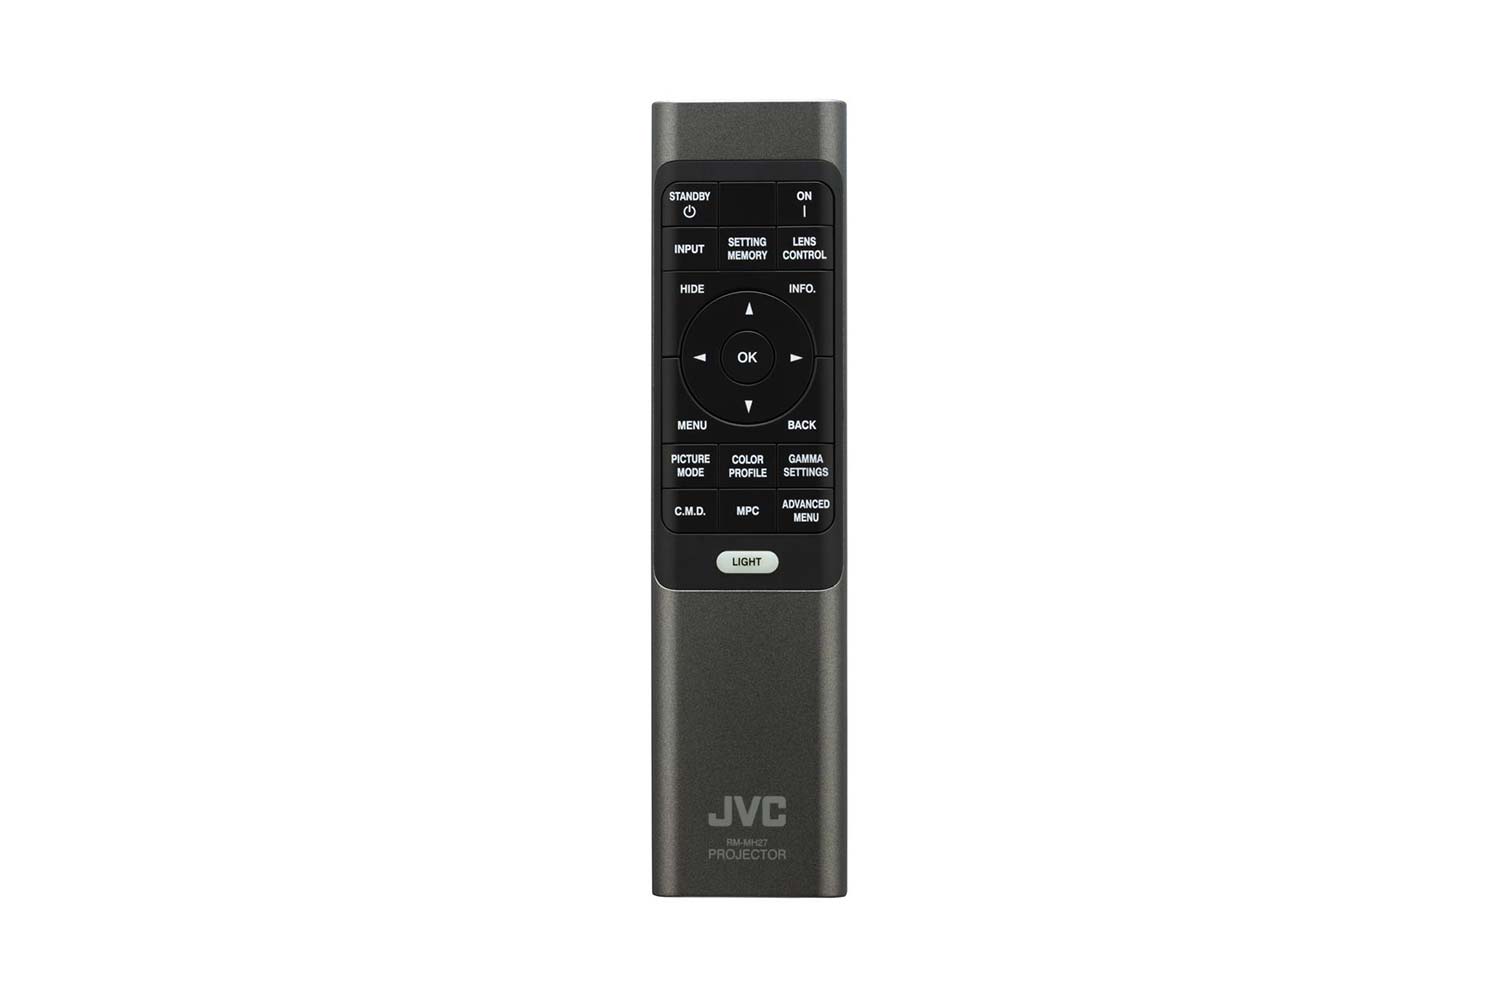 JVC DLA-NP5B 4K UltraHD HDR 3D Beamer Fernbedienung